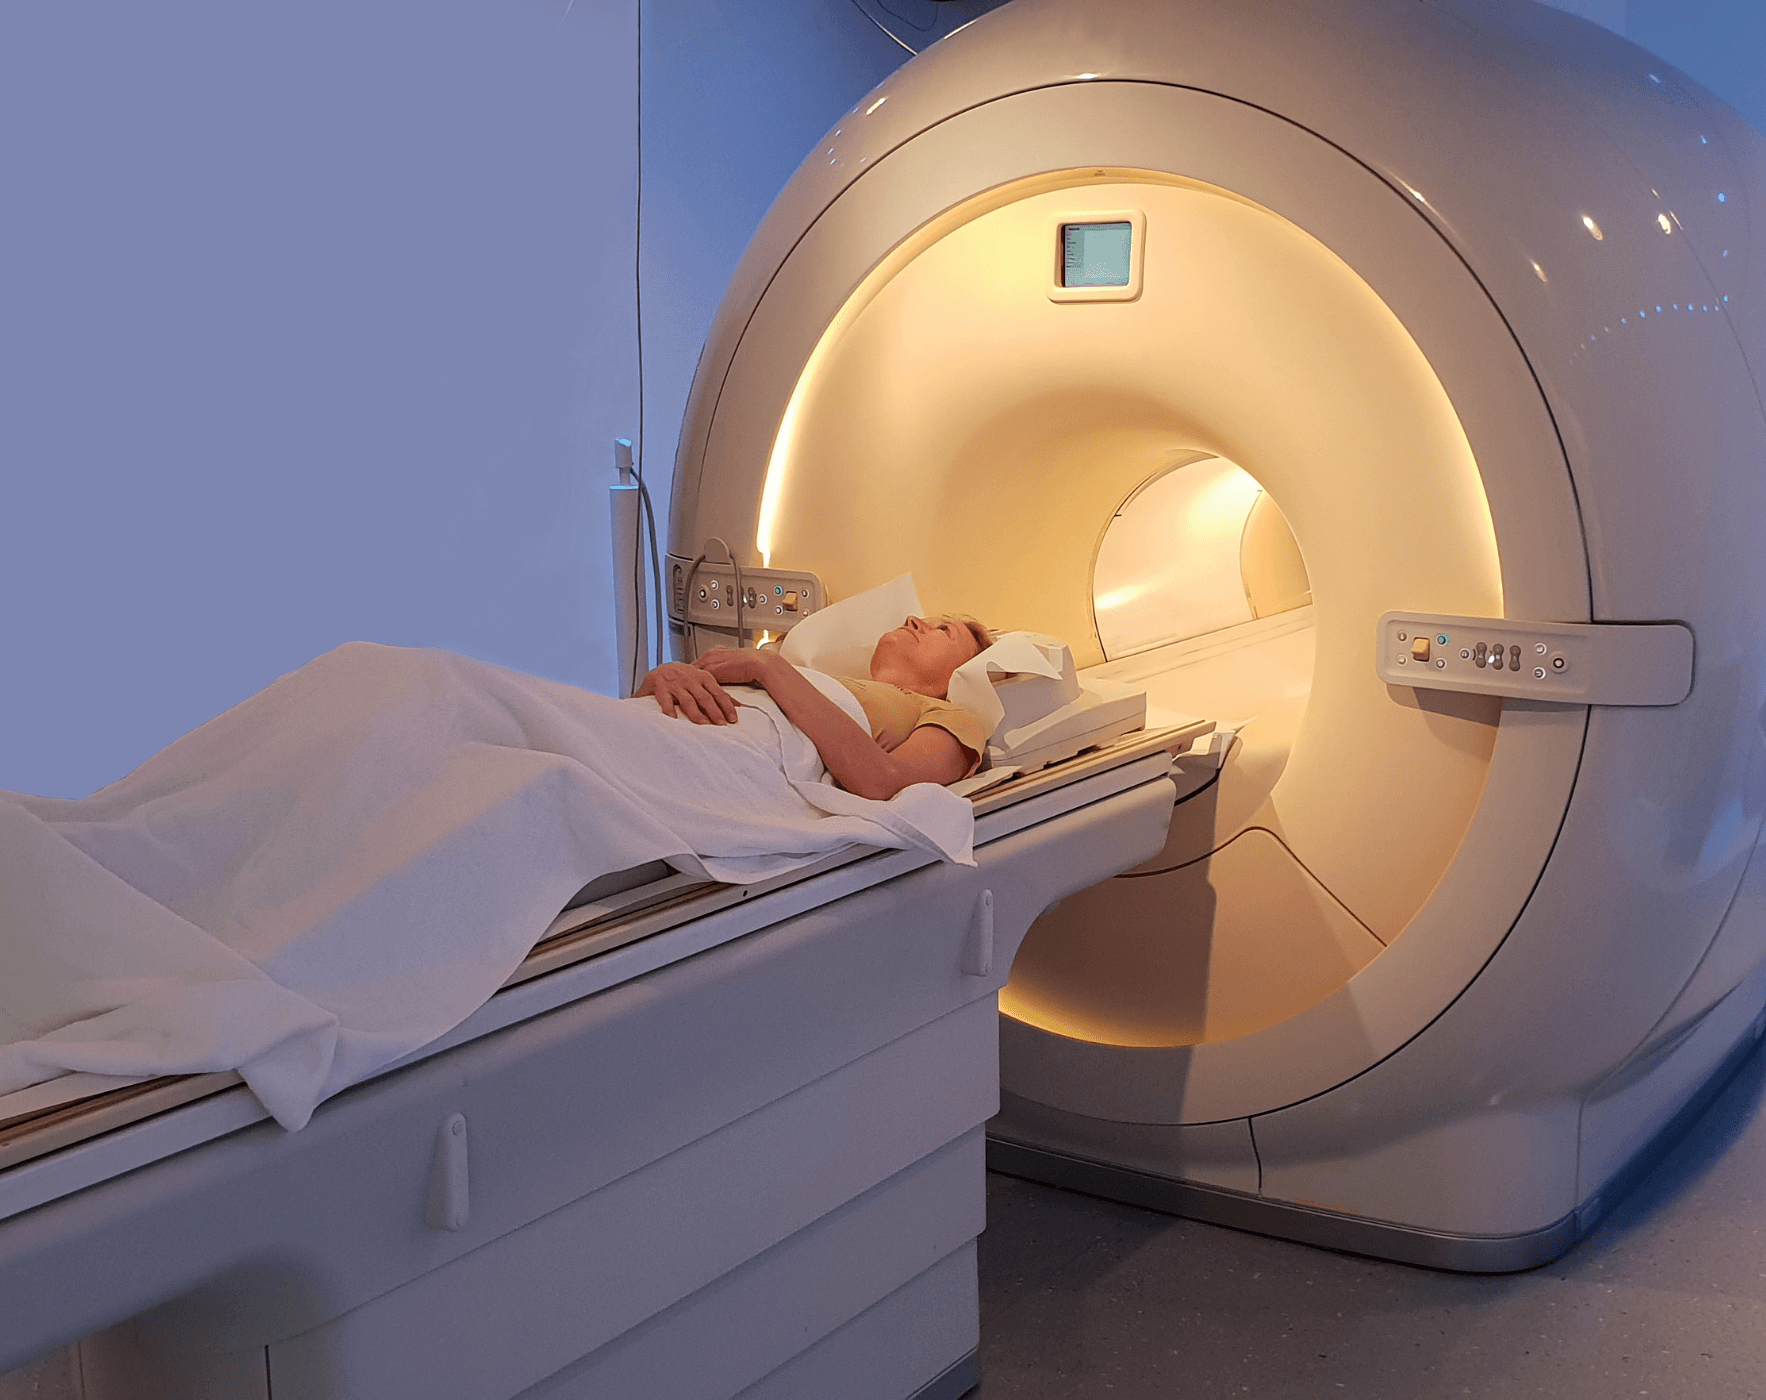 Staying Calm During an MRI